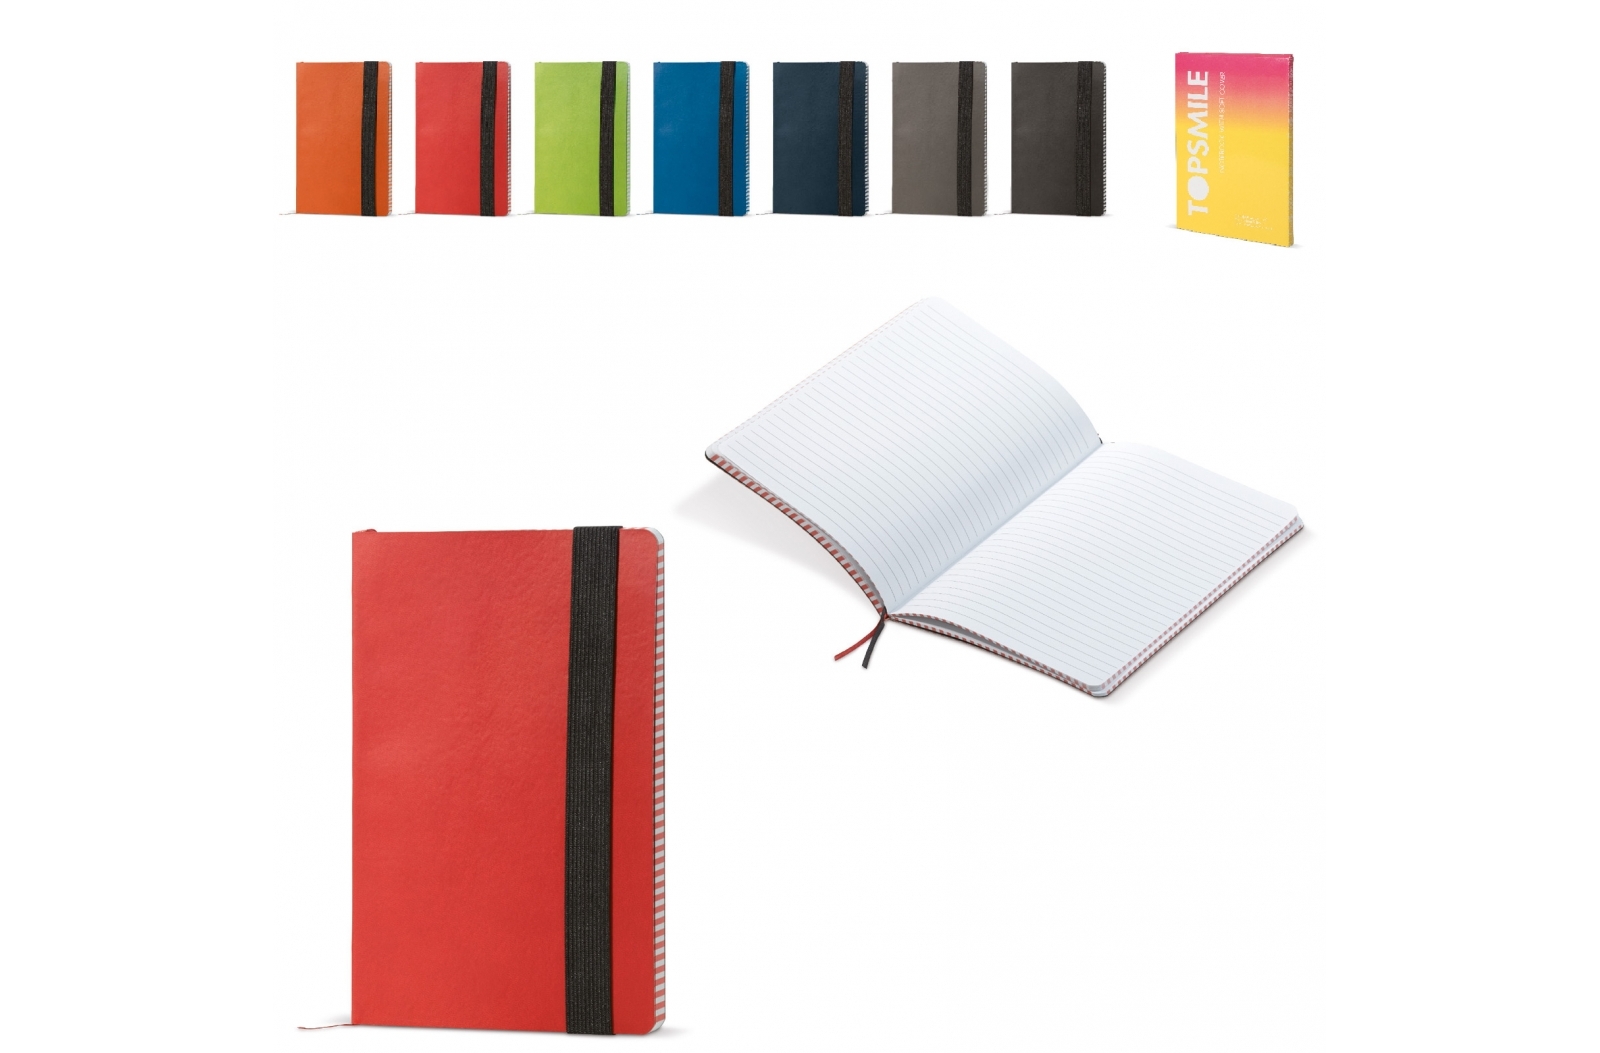 Notebook dal Design Pratico con Copertina Morbida e Extra Cinturino Elastico - Carate Brianza